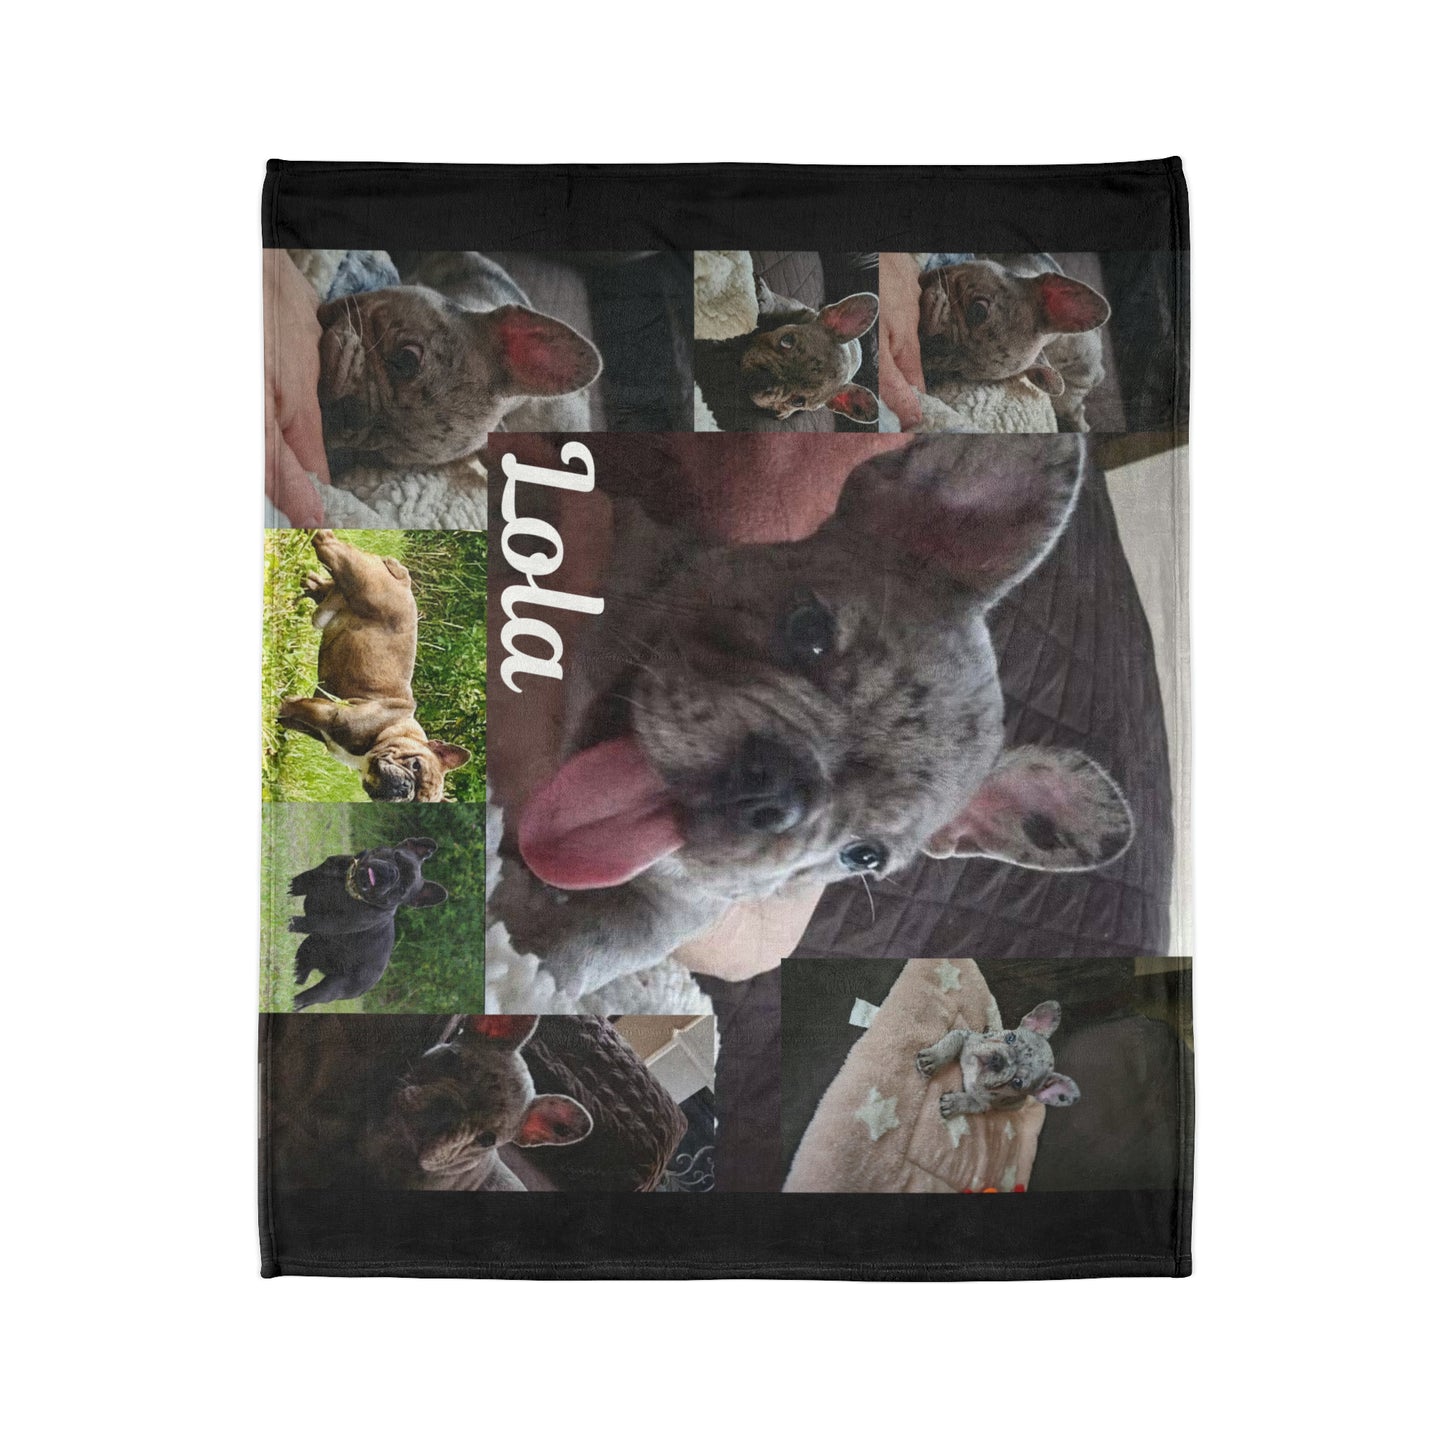 Custom blanket, photo blanket, personalized blanket, baby gift, adult gift, baby blanket, baby boy blanket, baby girl blanket